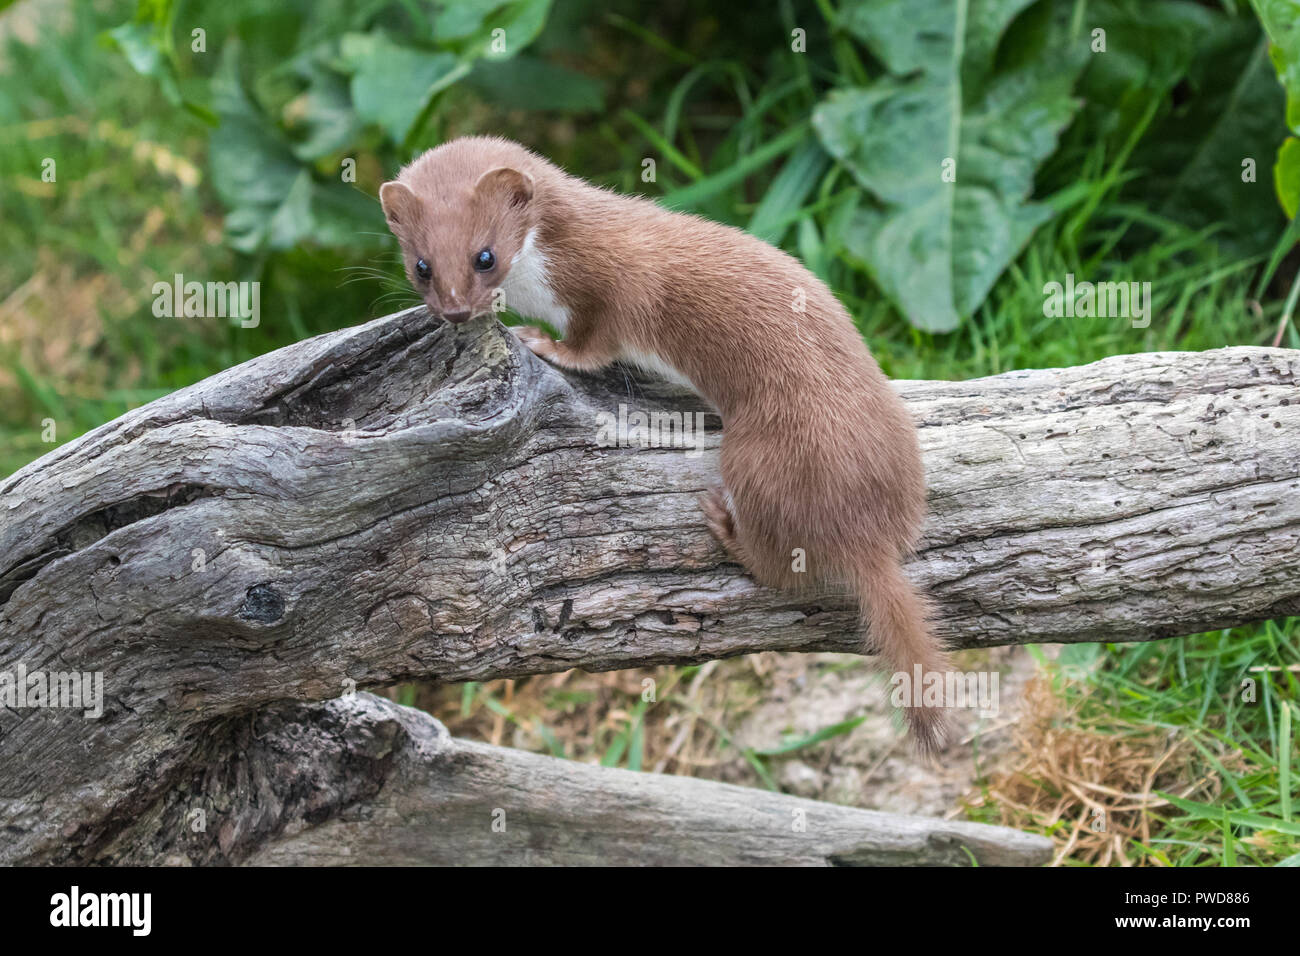 Weasel or Least weasel (mustela nivalis) on a tree log Stock Photo